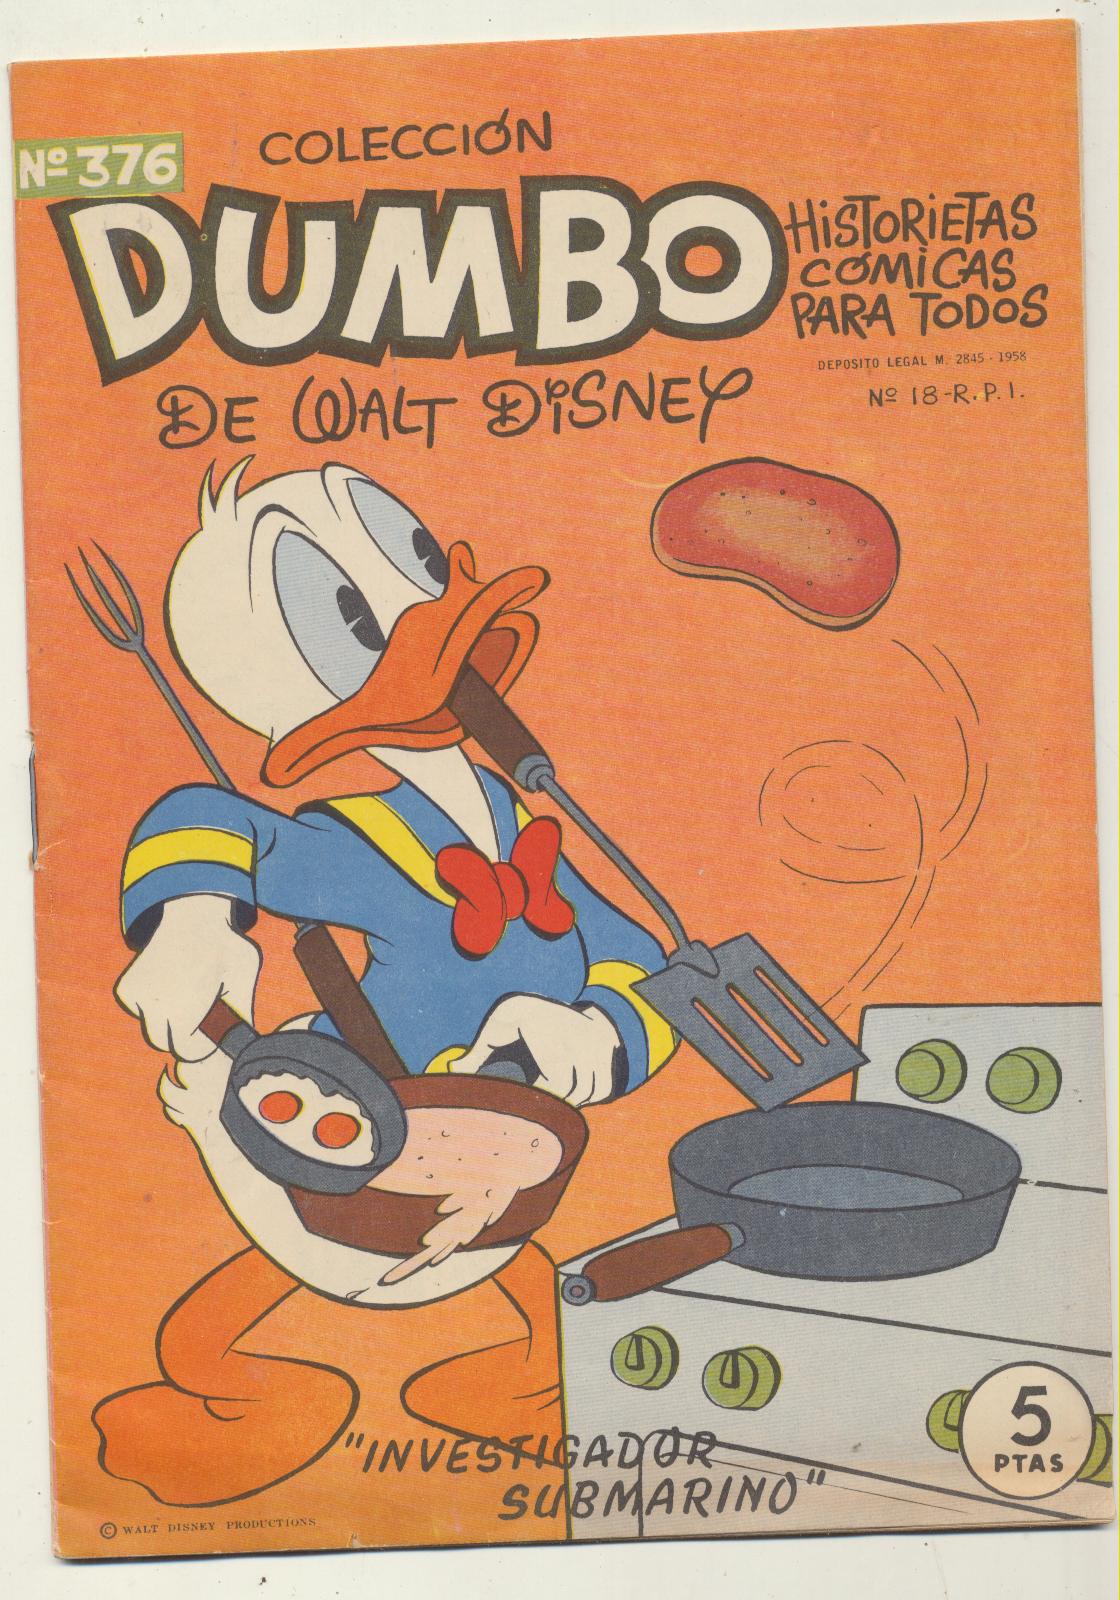 Dumbo nº 376. Ersa